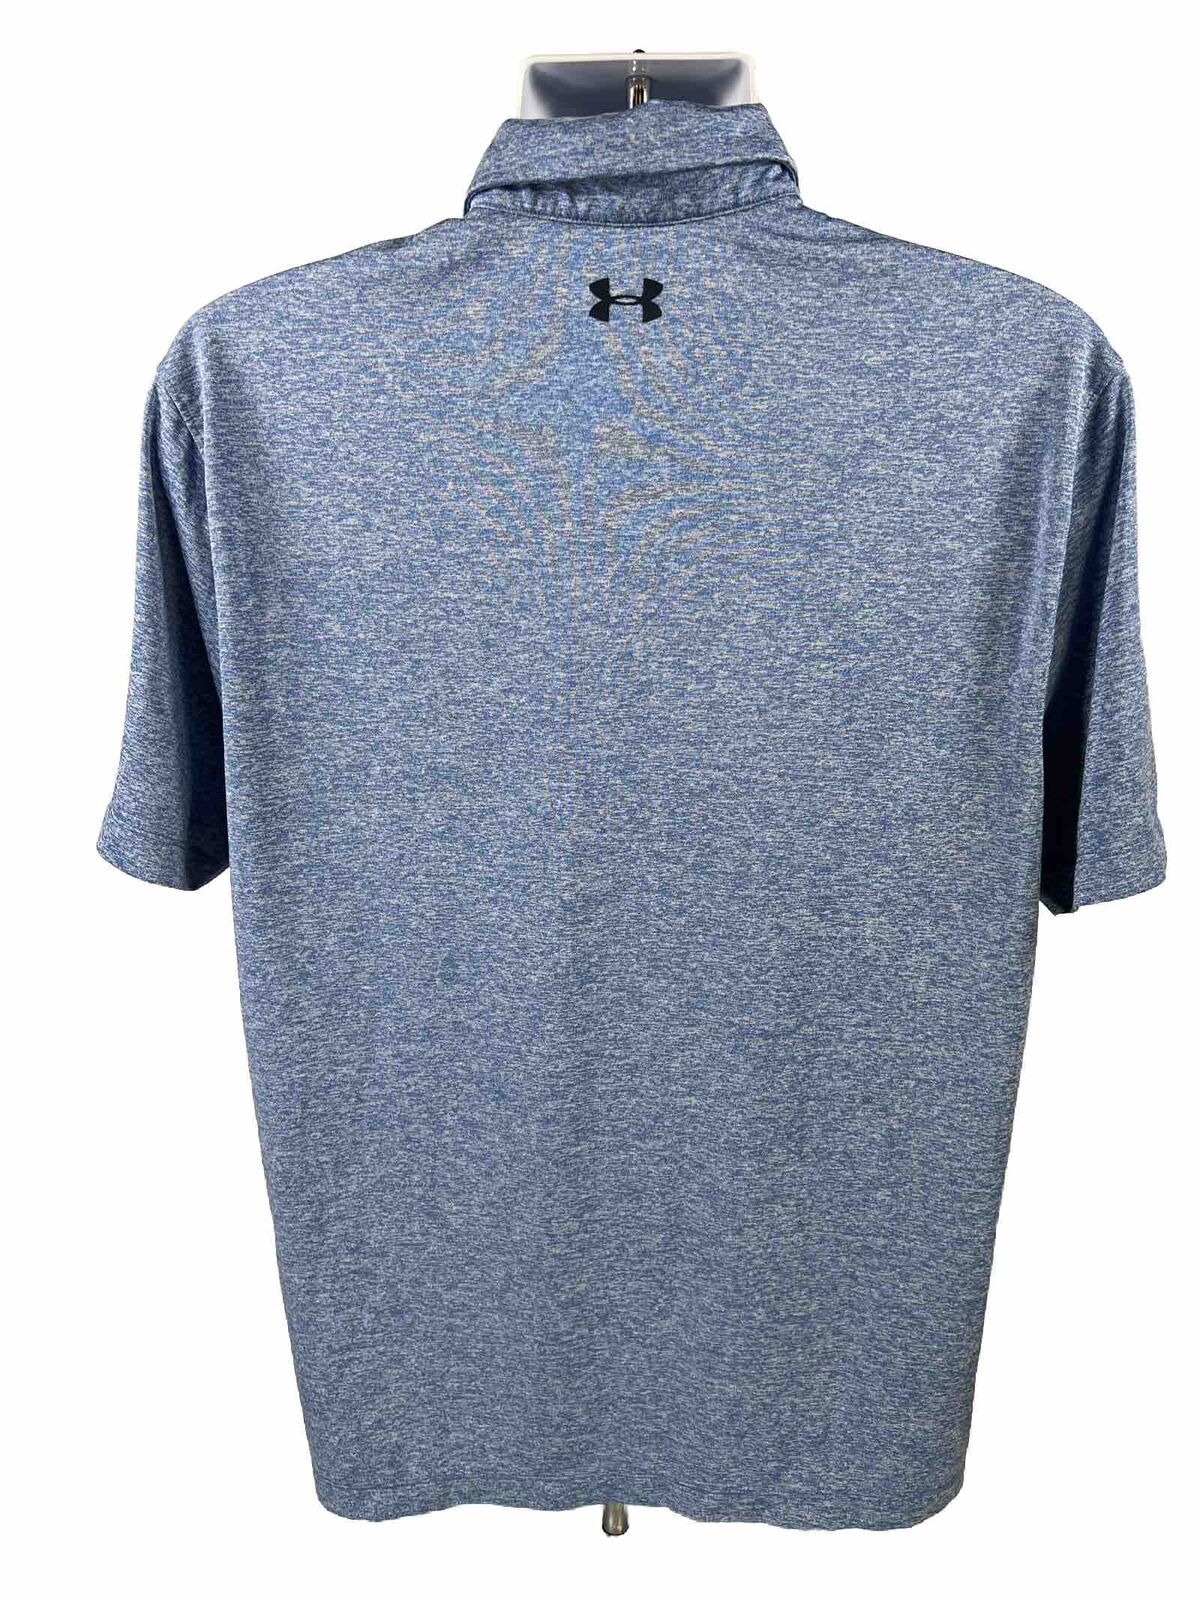 Under Armour Men's Blue HeatGear Loose Fit Golf Polo Shirt - L